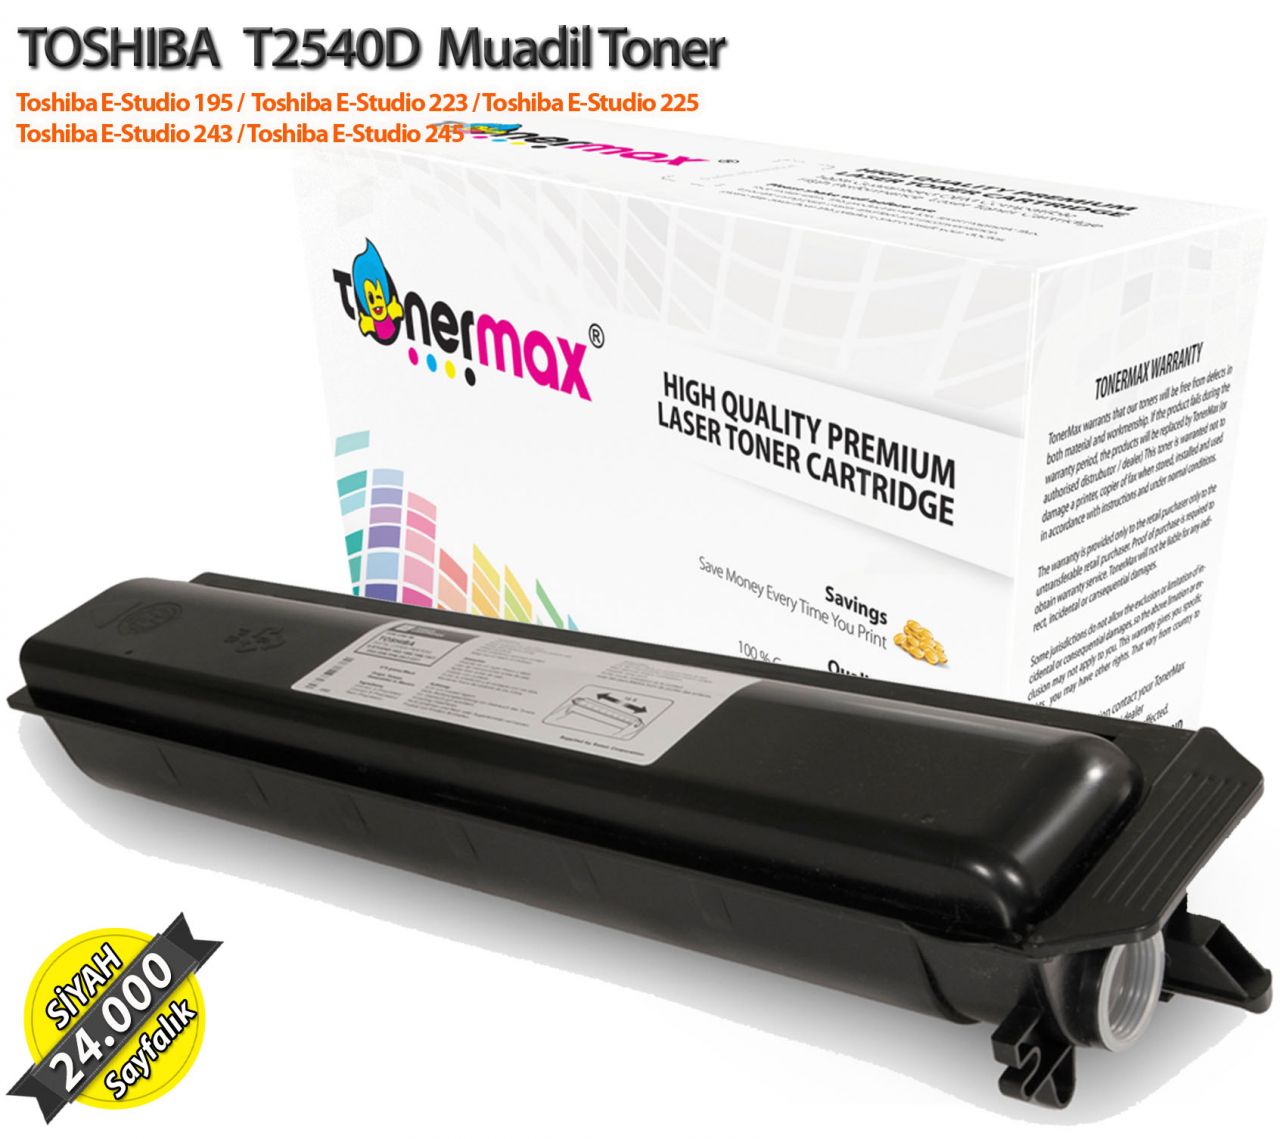 Toshiba T2540D / Estudio 195 / 223 / 225 / 243 / 245 Muadil Toneri